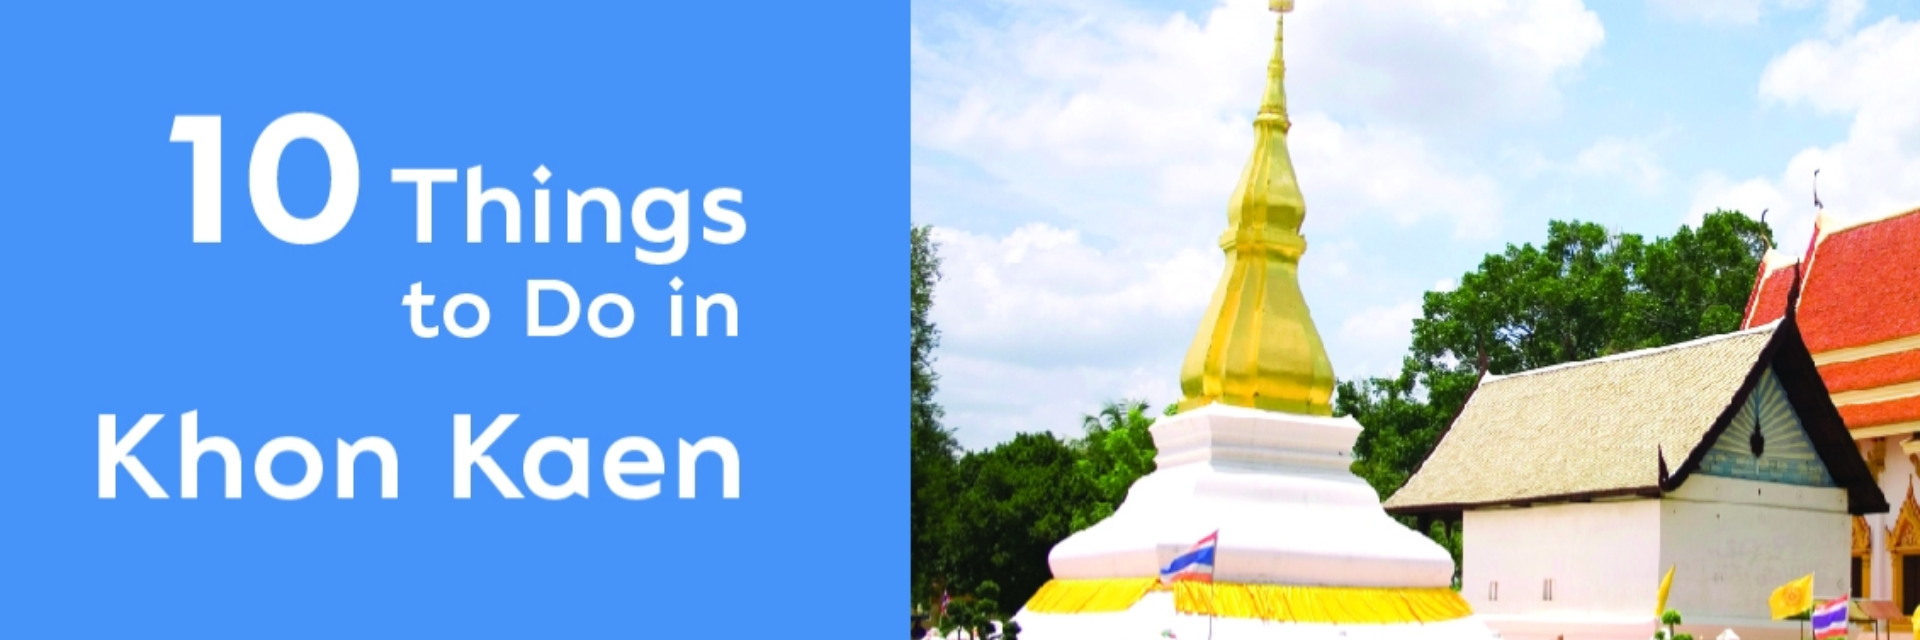 10 THINGS TO DO IN KHON KAEN